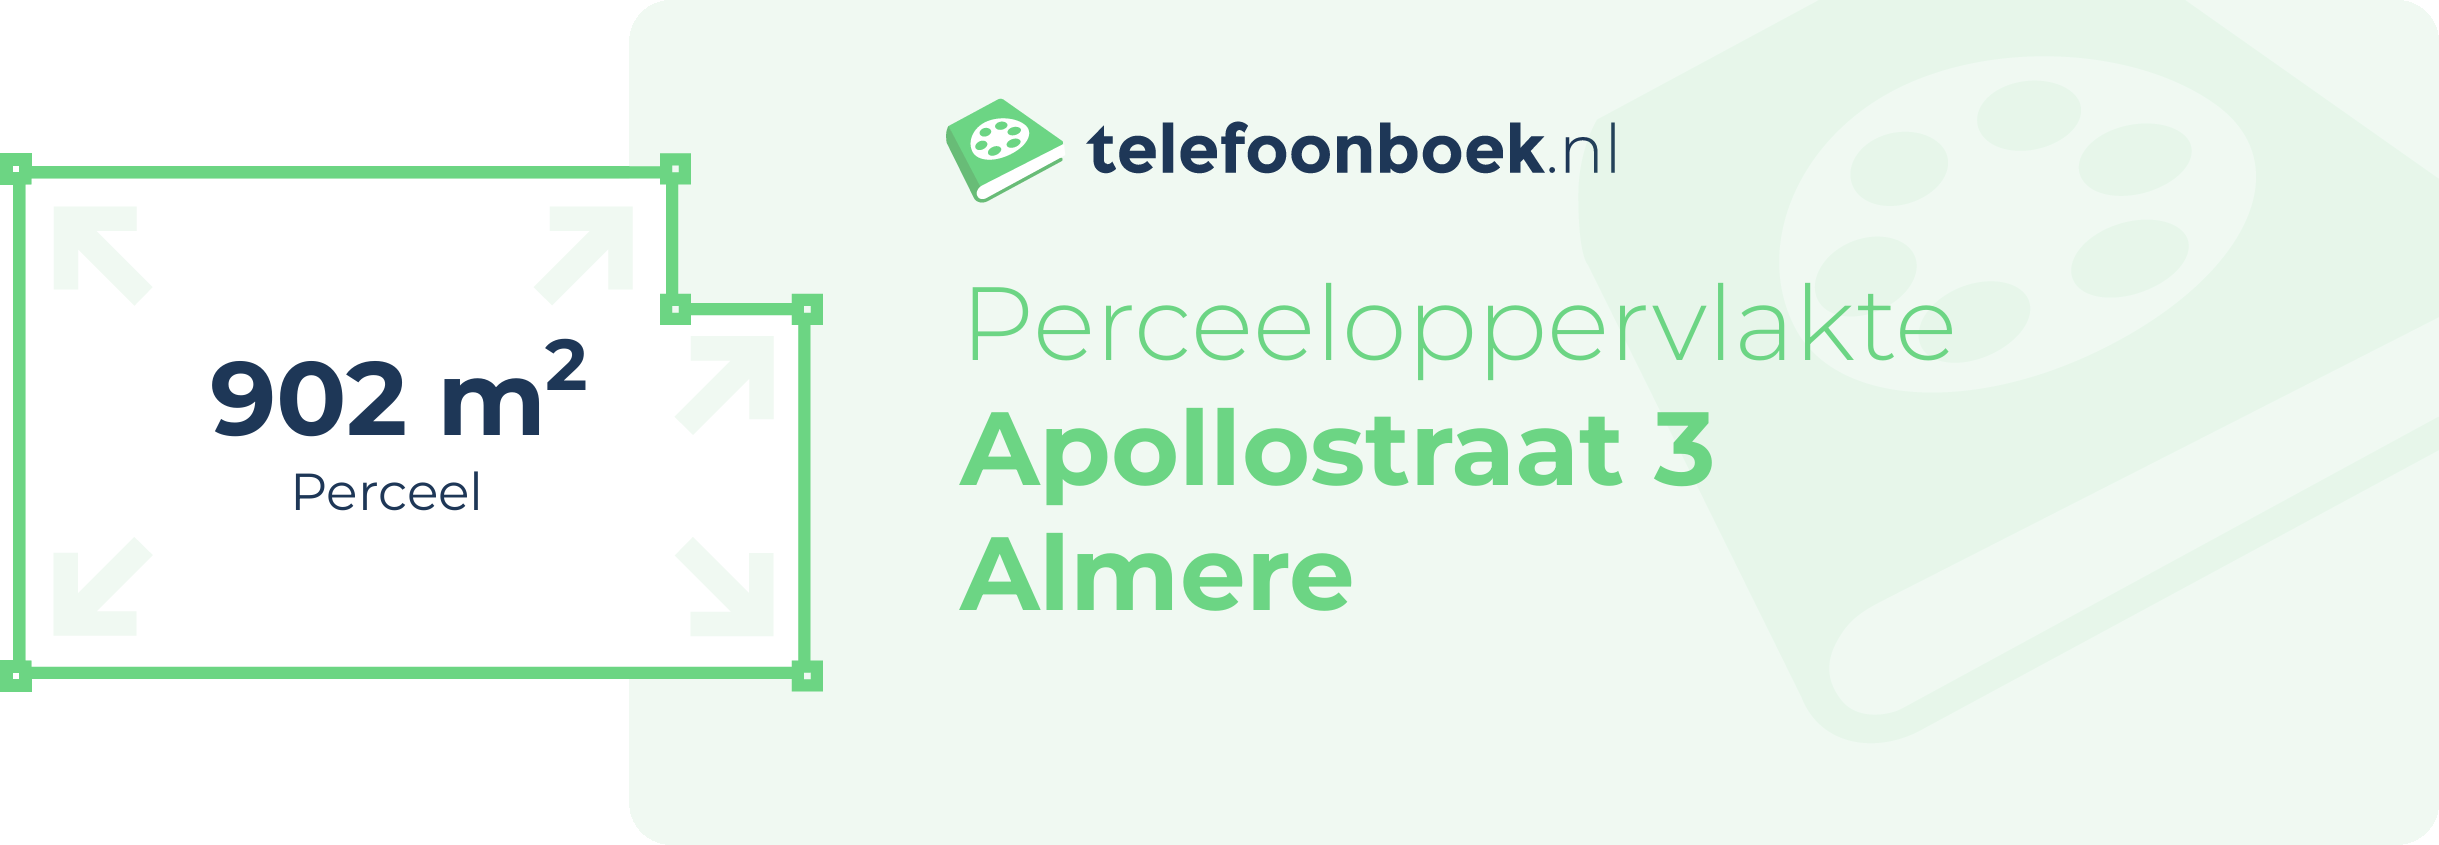 Perceeloppervlakte Apollostraat 3 Almere